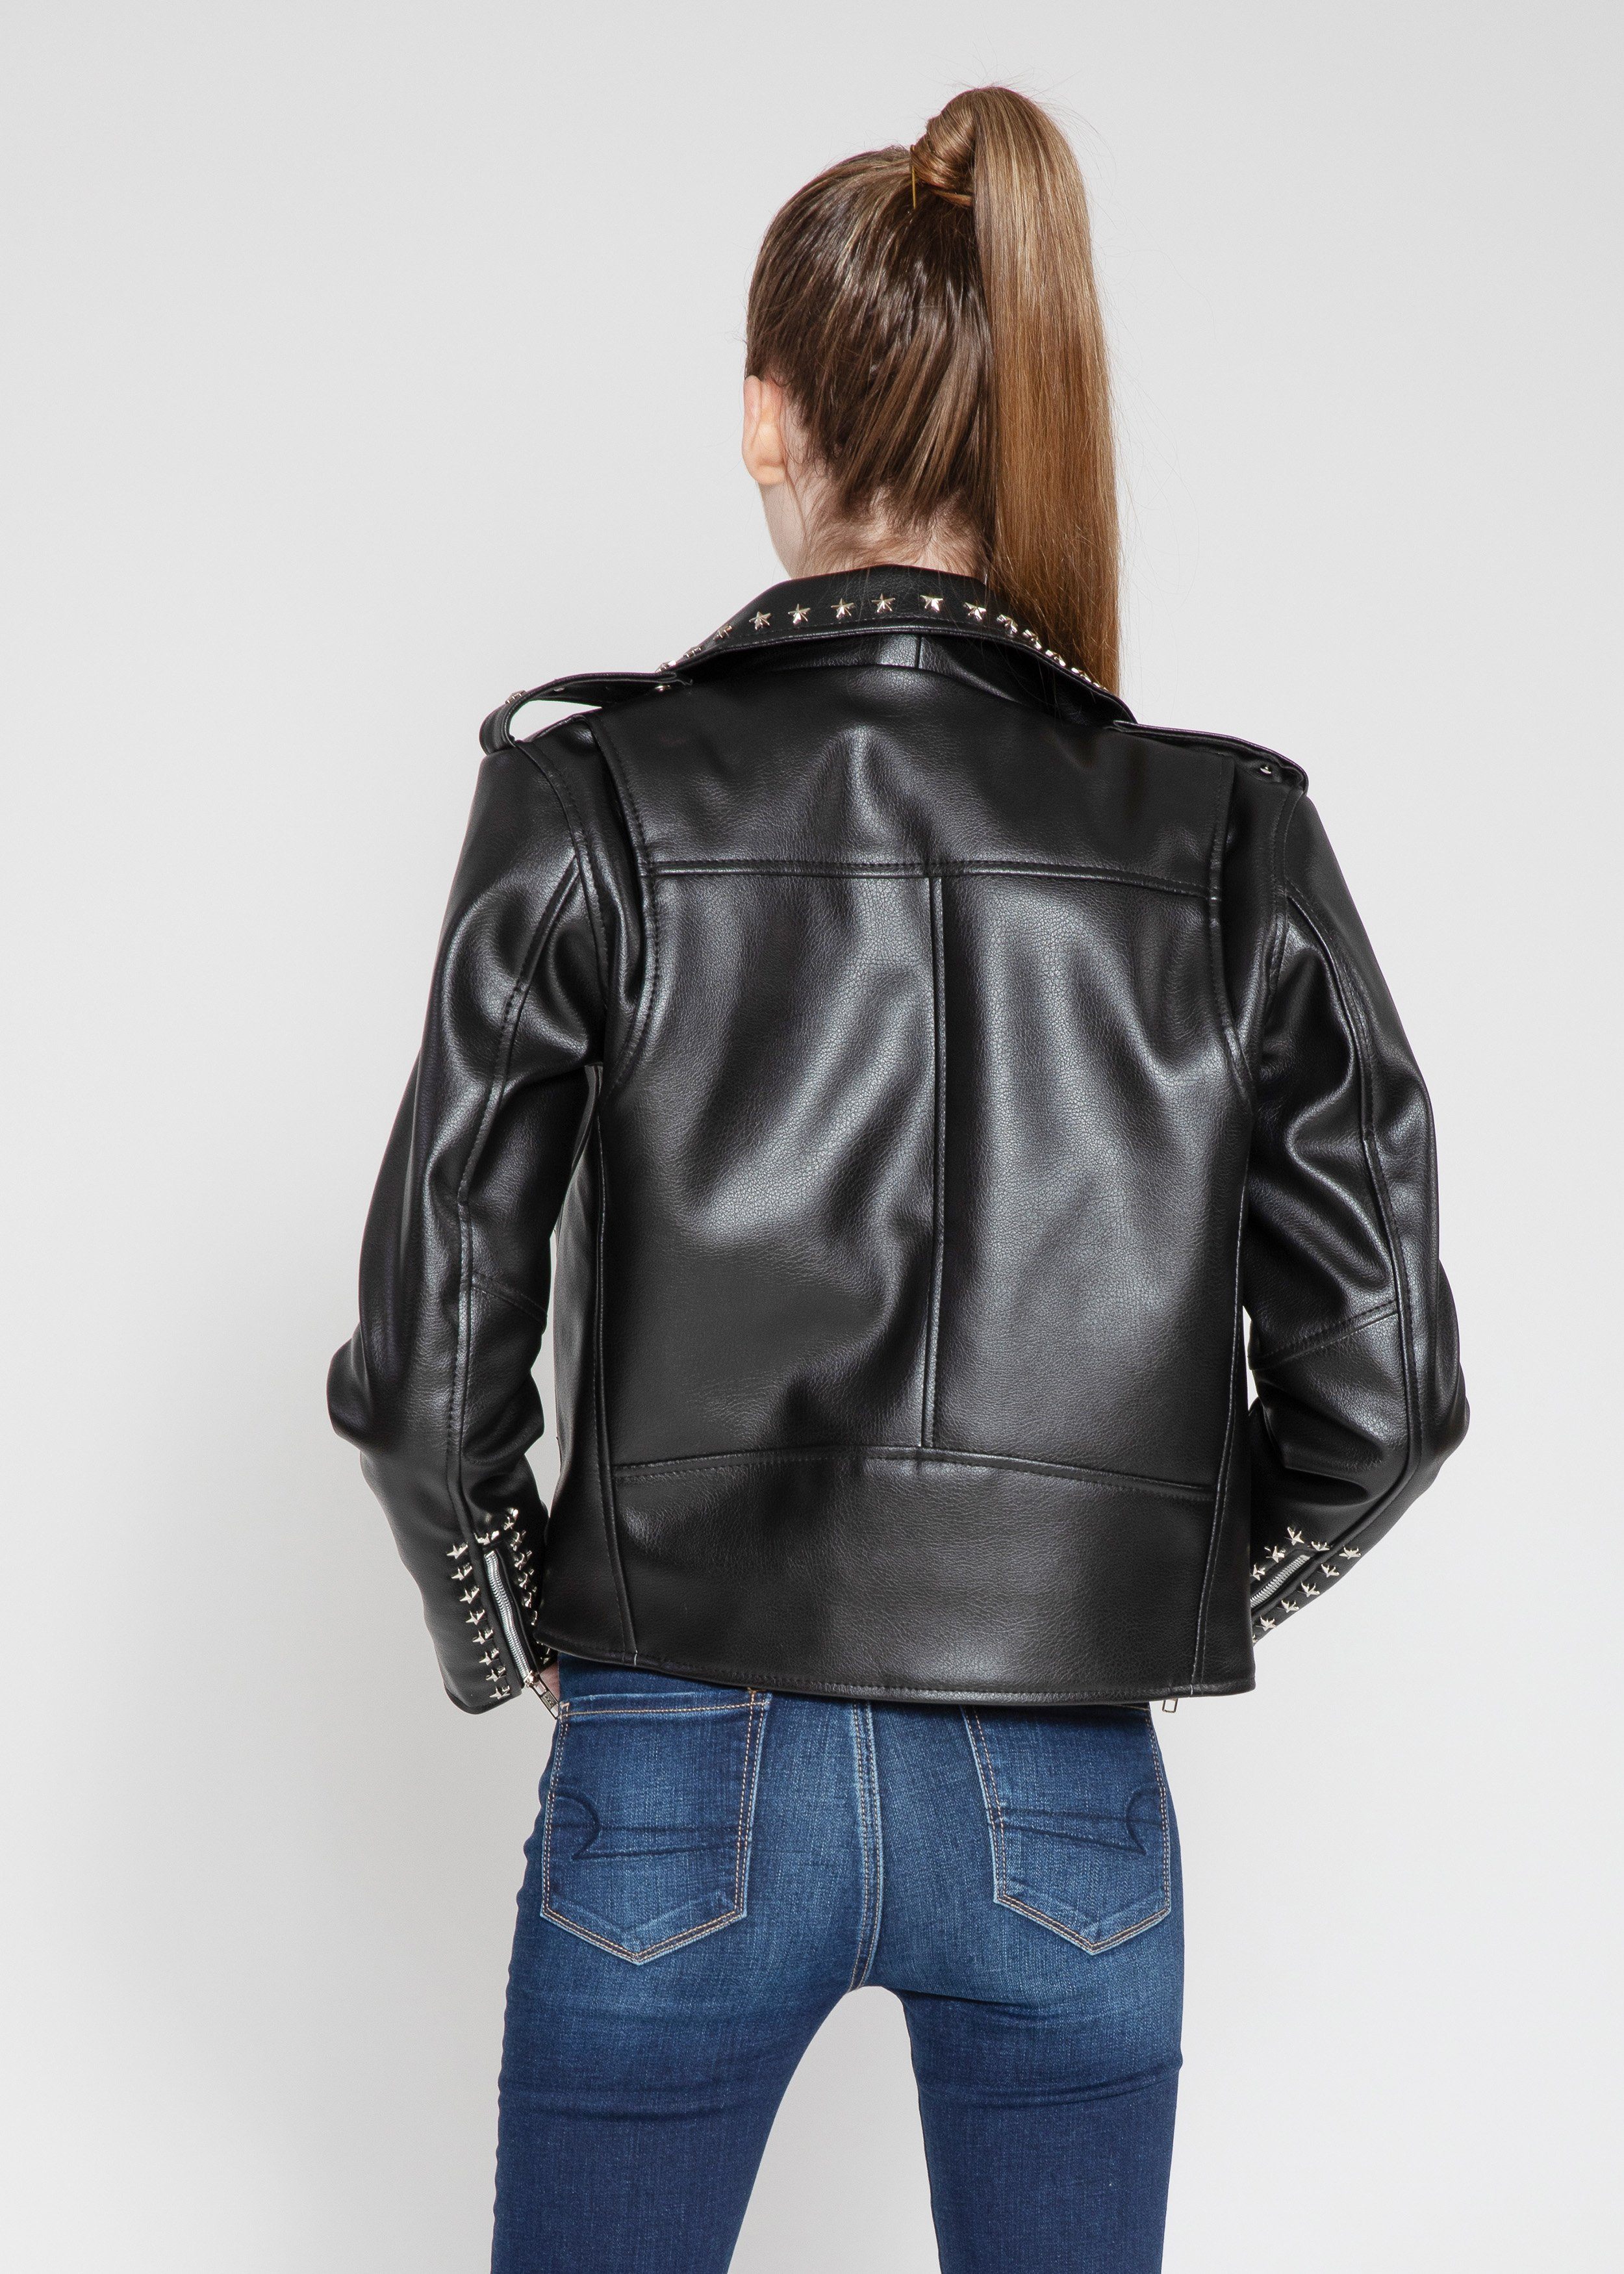 Womens Leather Jacket - Women's Vegan Star Studded Black Moto Style Faux Leather Jacket